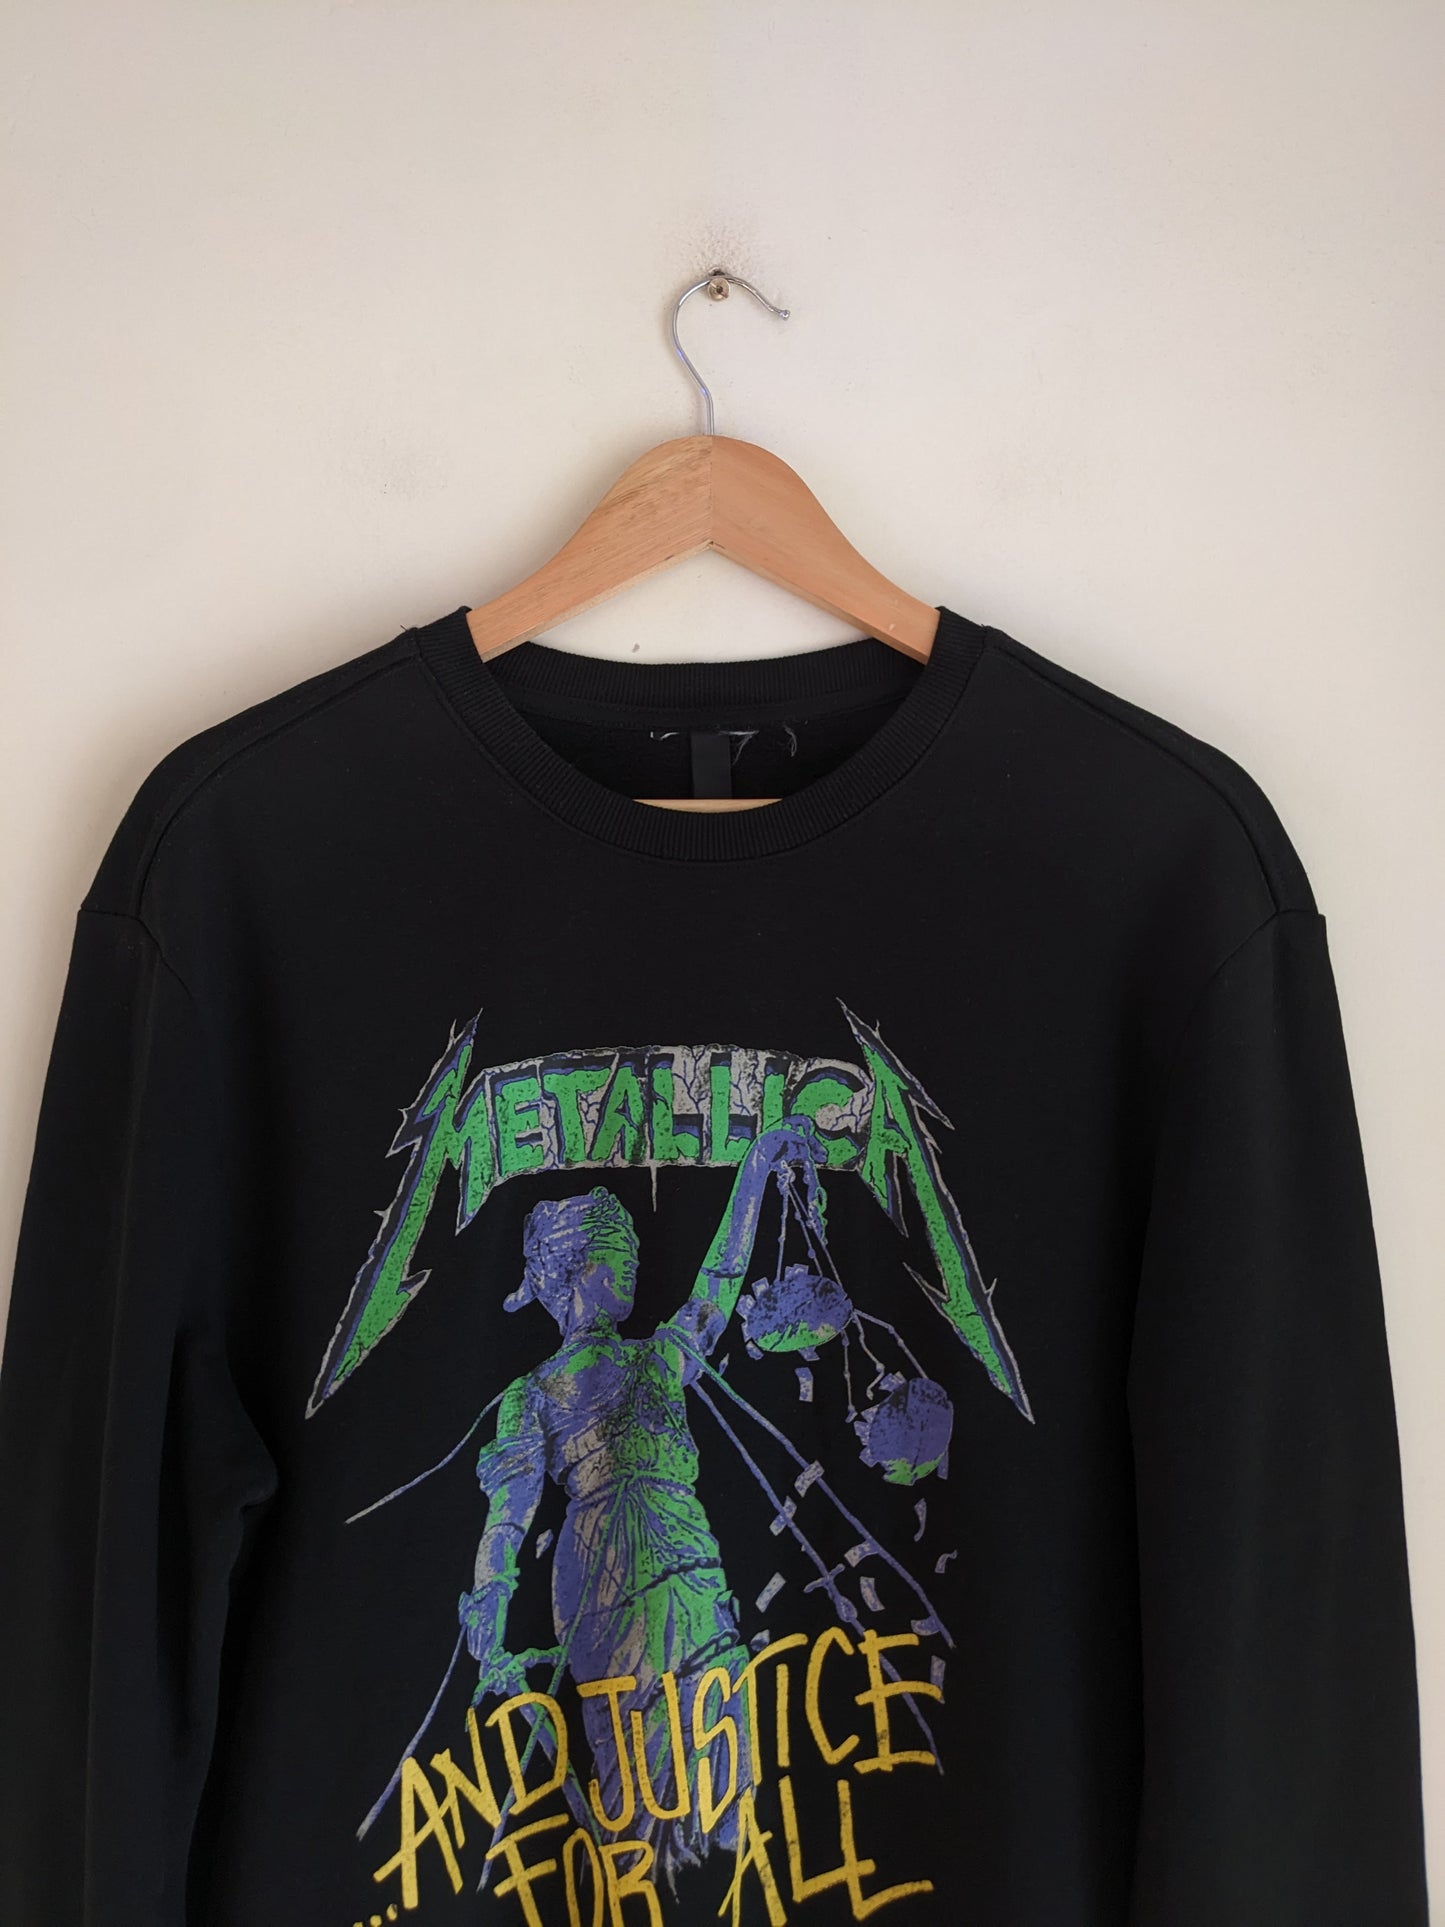 H&M Black Sweatshirt